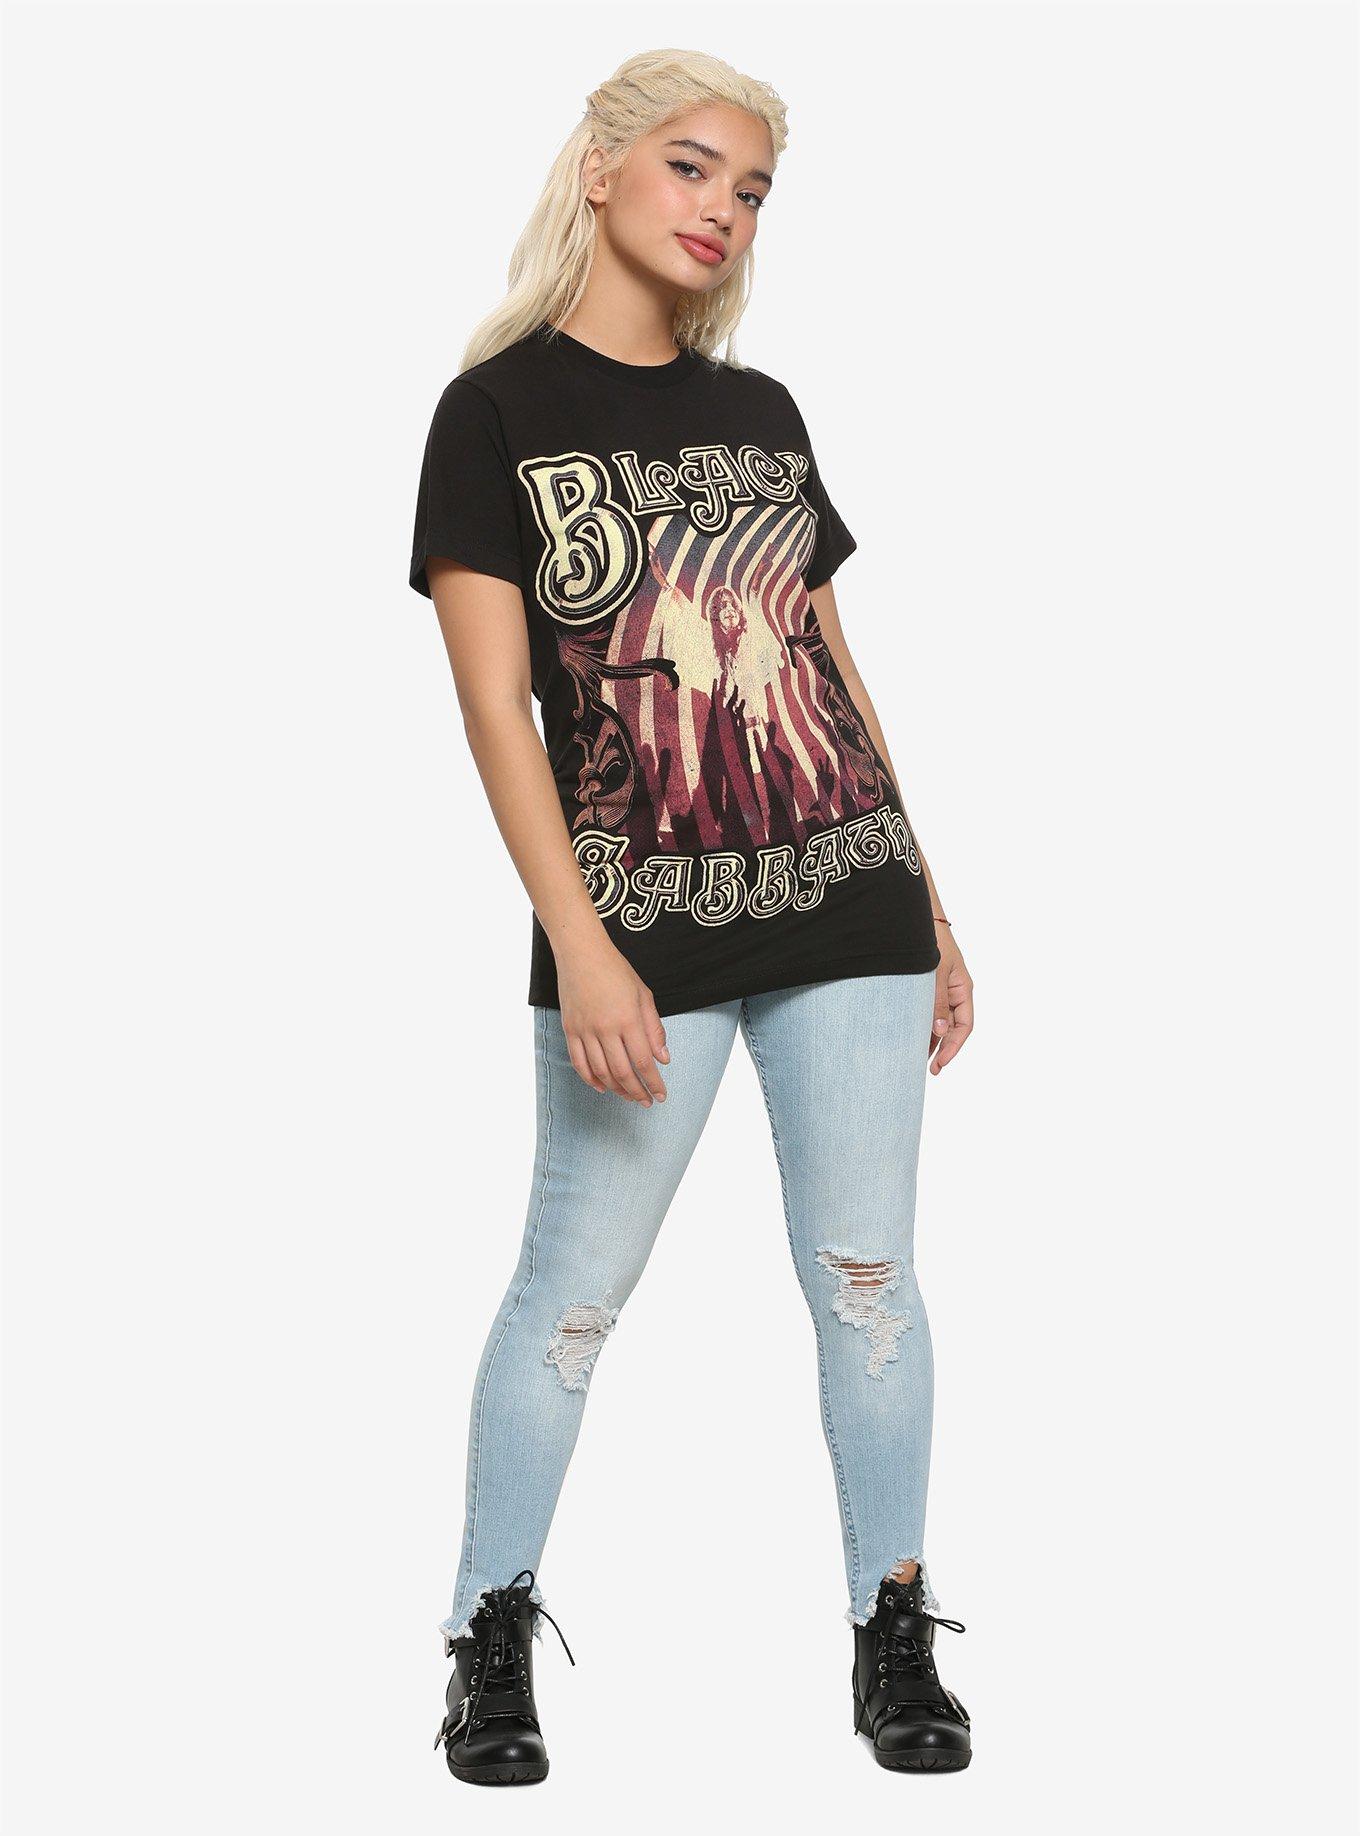 Black Sabbath Vintage Concert Photo Girls T-Shirt, BLACK, alternate